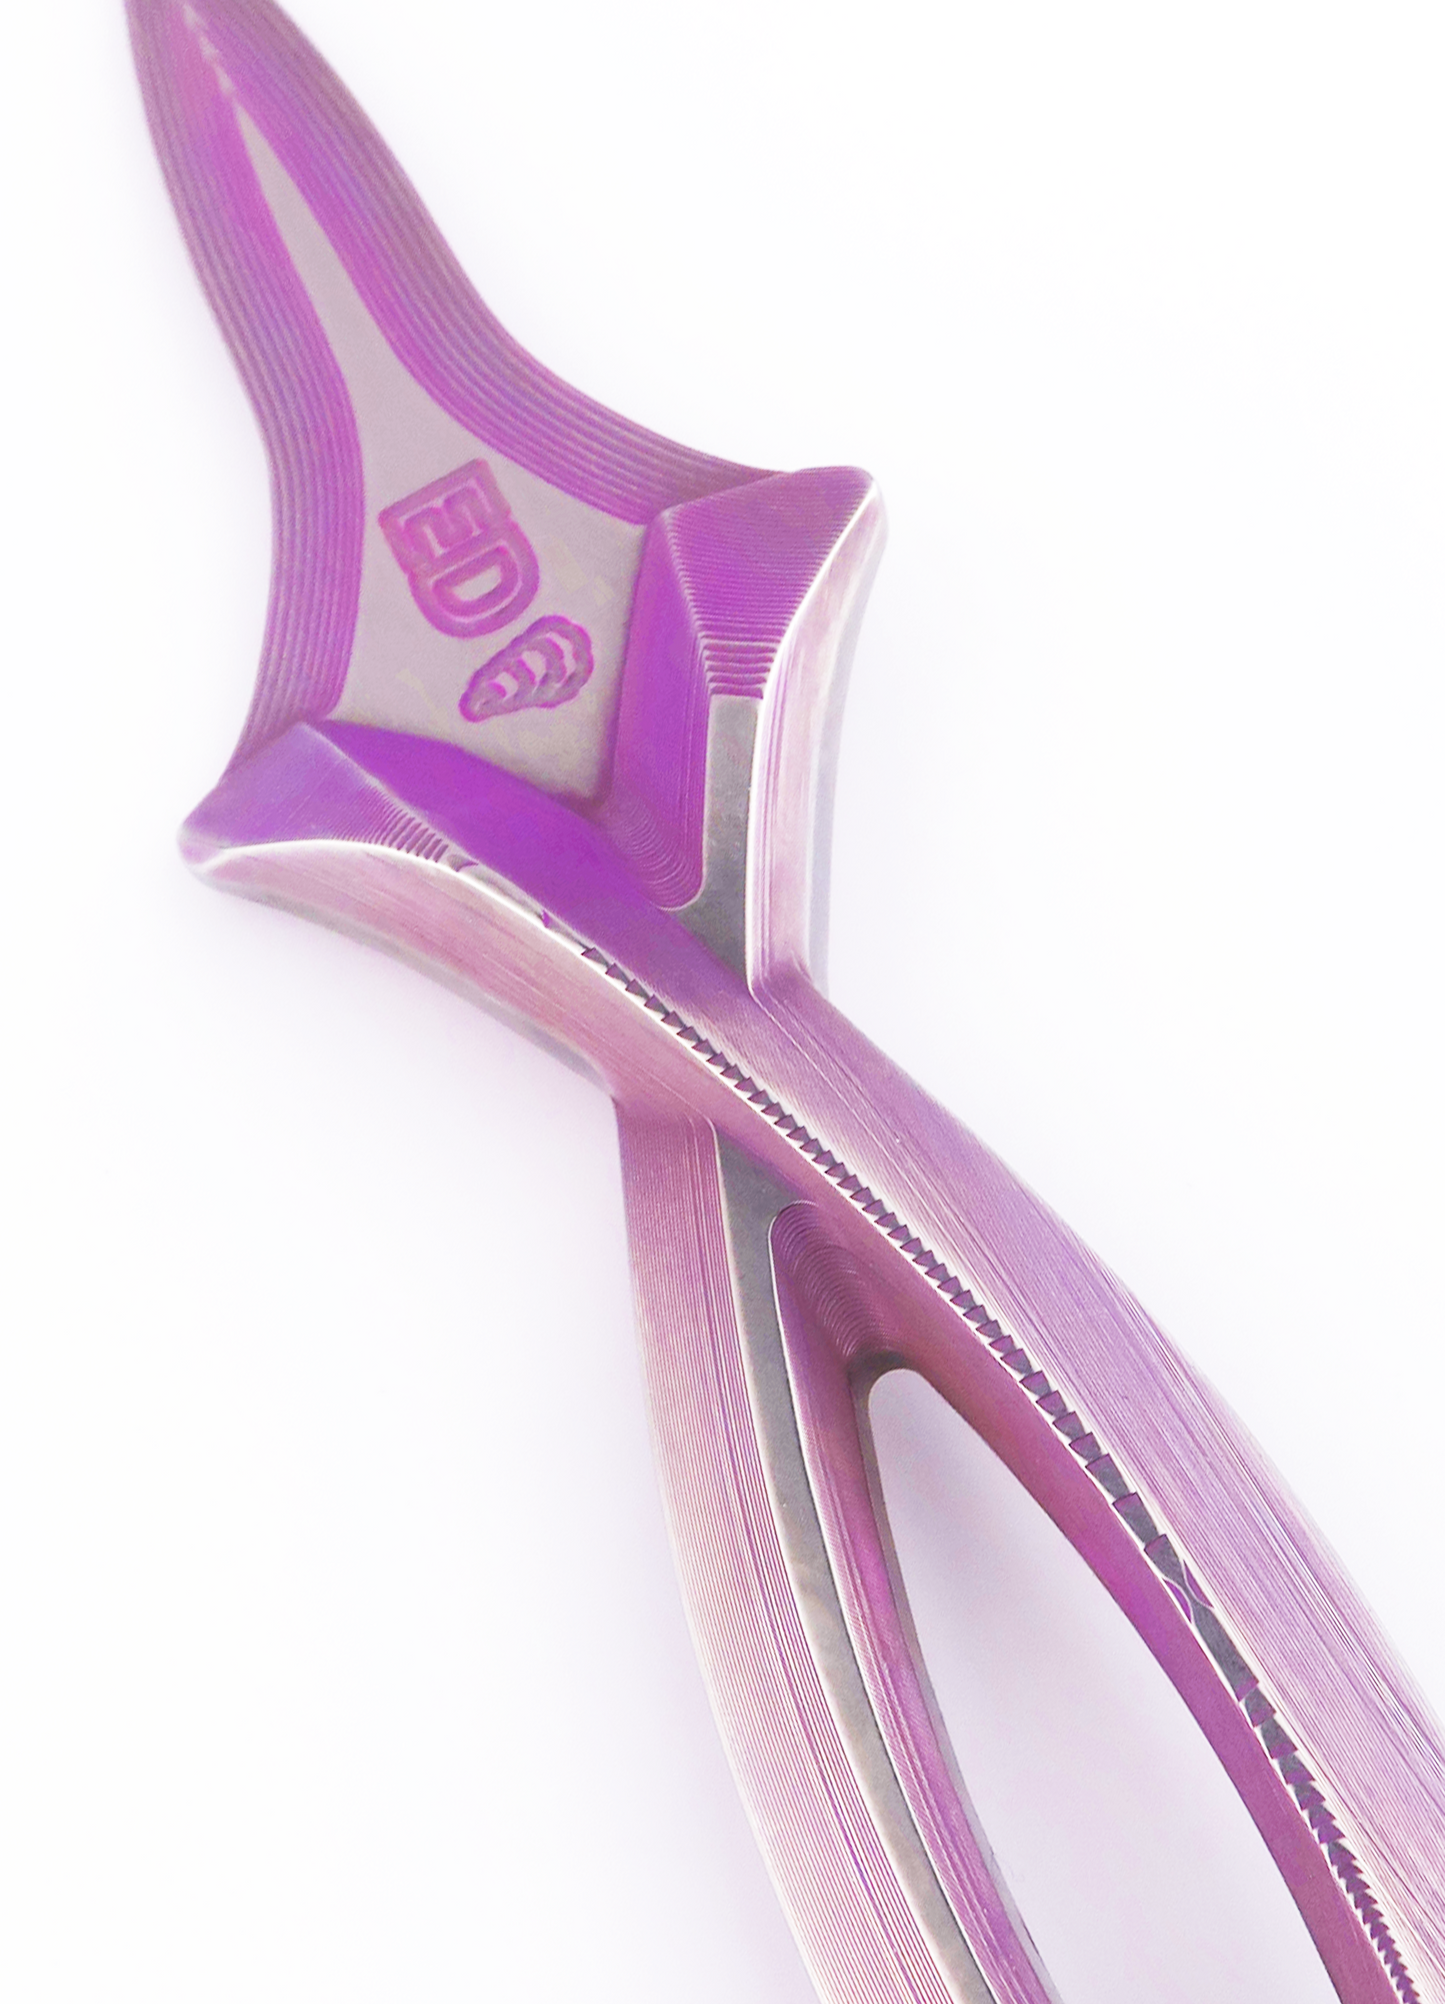 The Hugo Full Titanium Oyster Knife - Pink